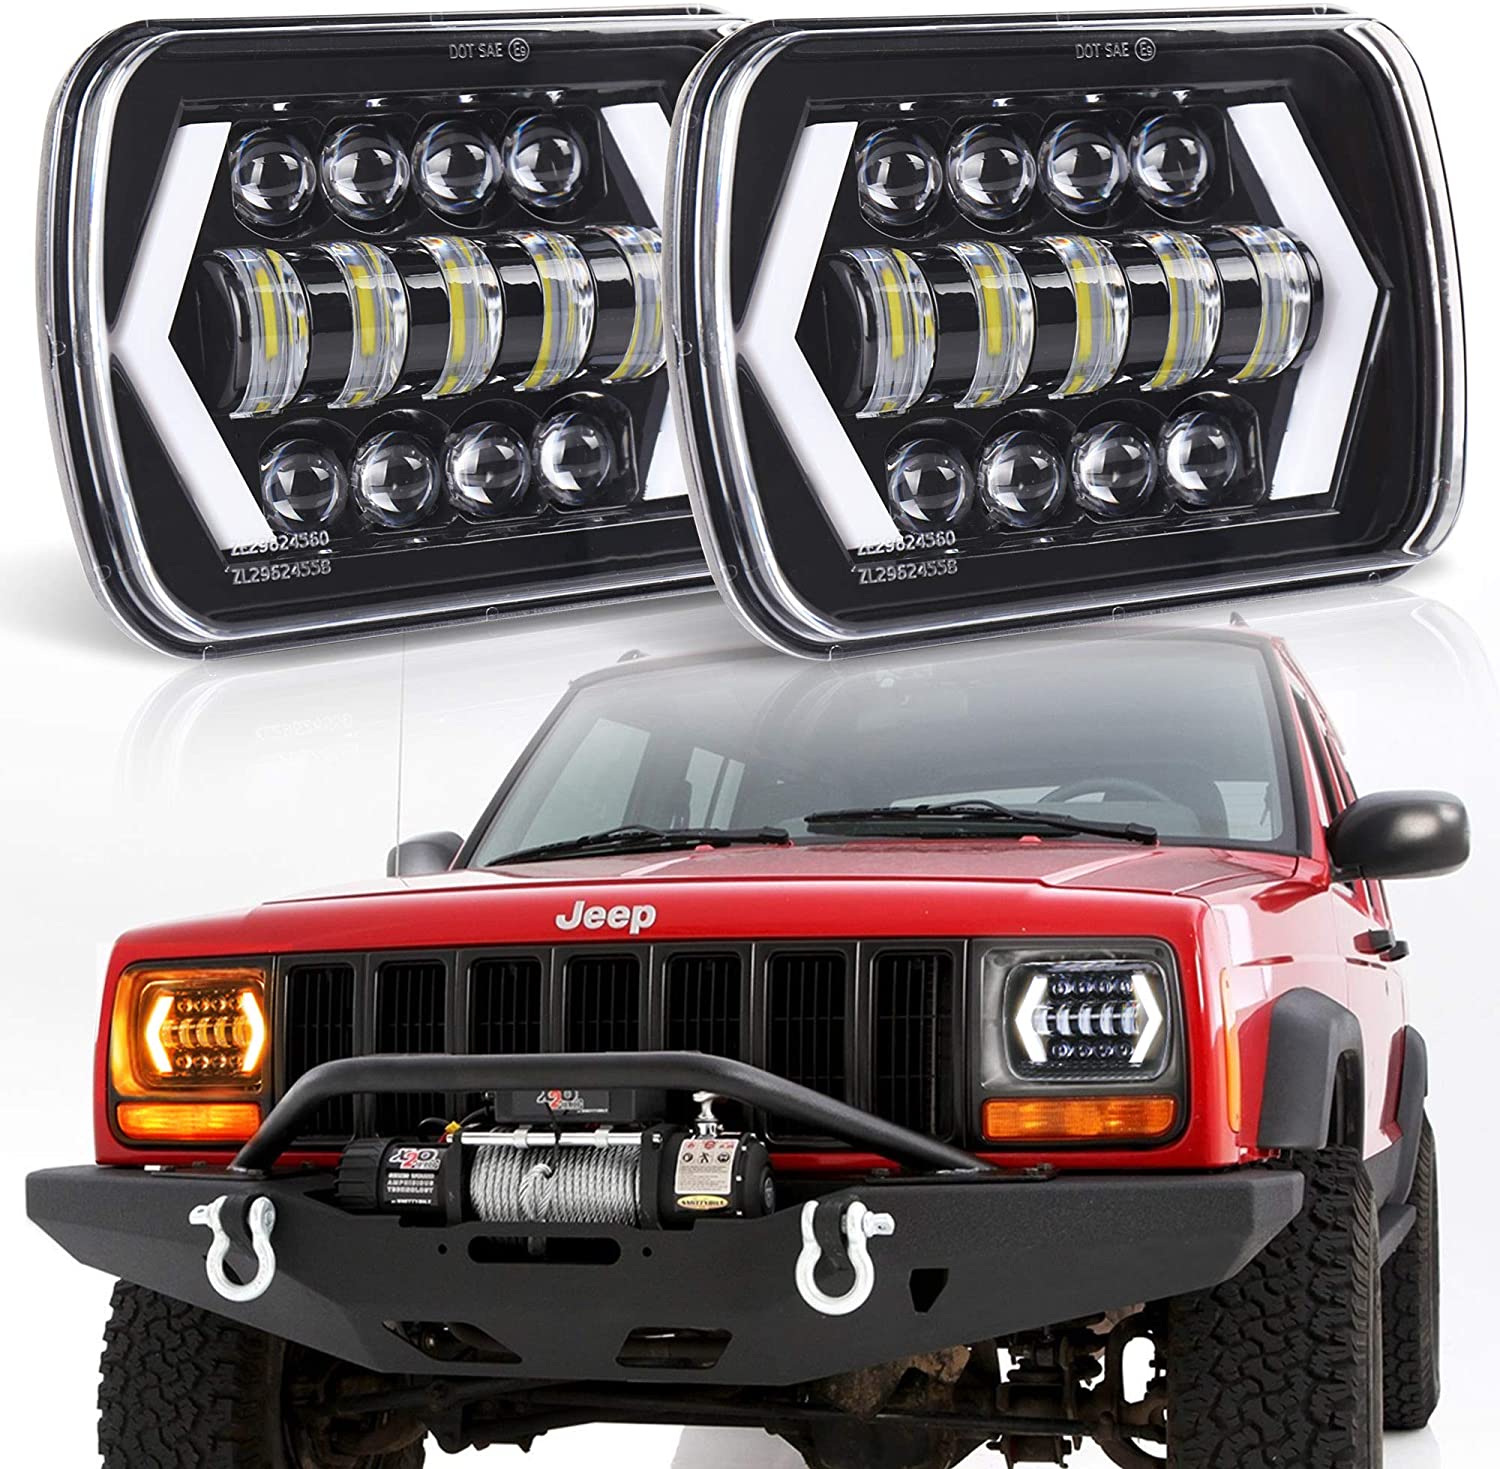 7x6 inch LED Headlights, 5x7 inch Halo Square LED Headlamp with Arrow DRL Turn Signal Light Replaces H6054 H5054 H6054LL 69822 Fit Trucks Wrangler XJ YJ Sedans GMC